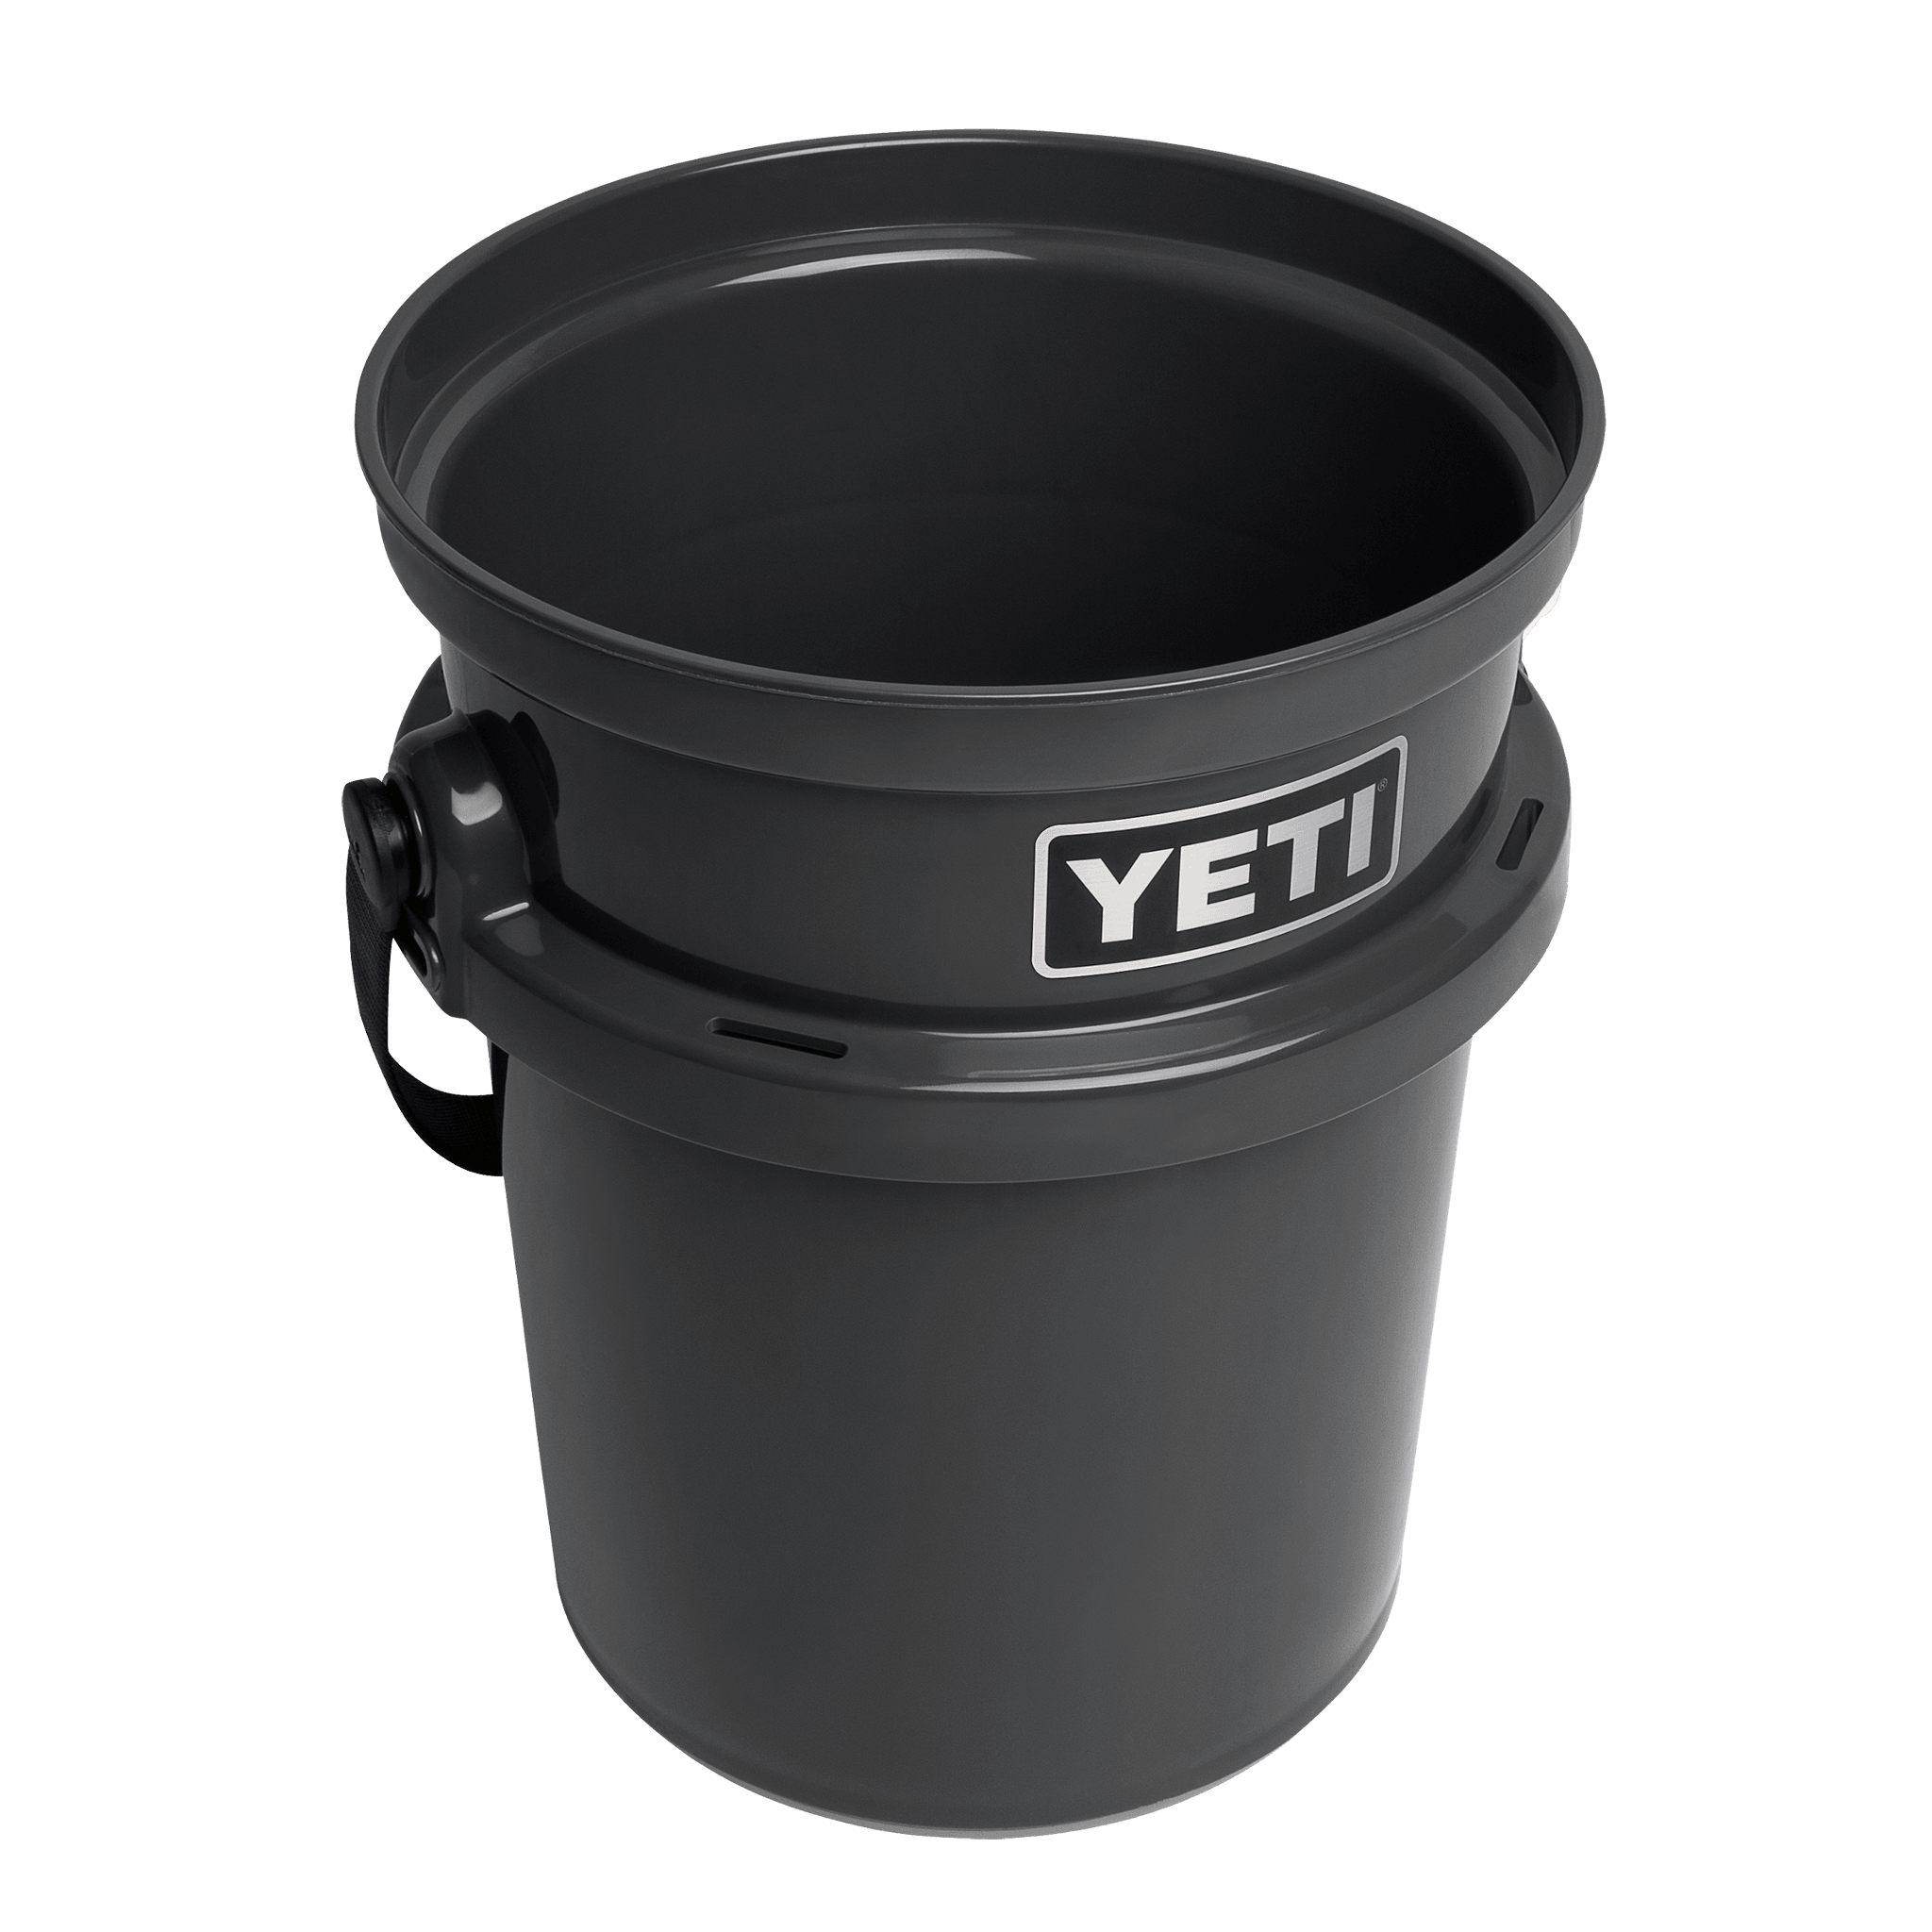 yeti bucket products sold at owenhouse ace hardware of bozeman montana